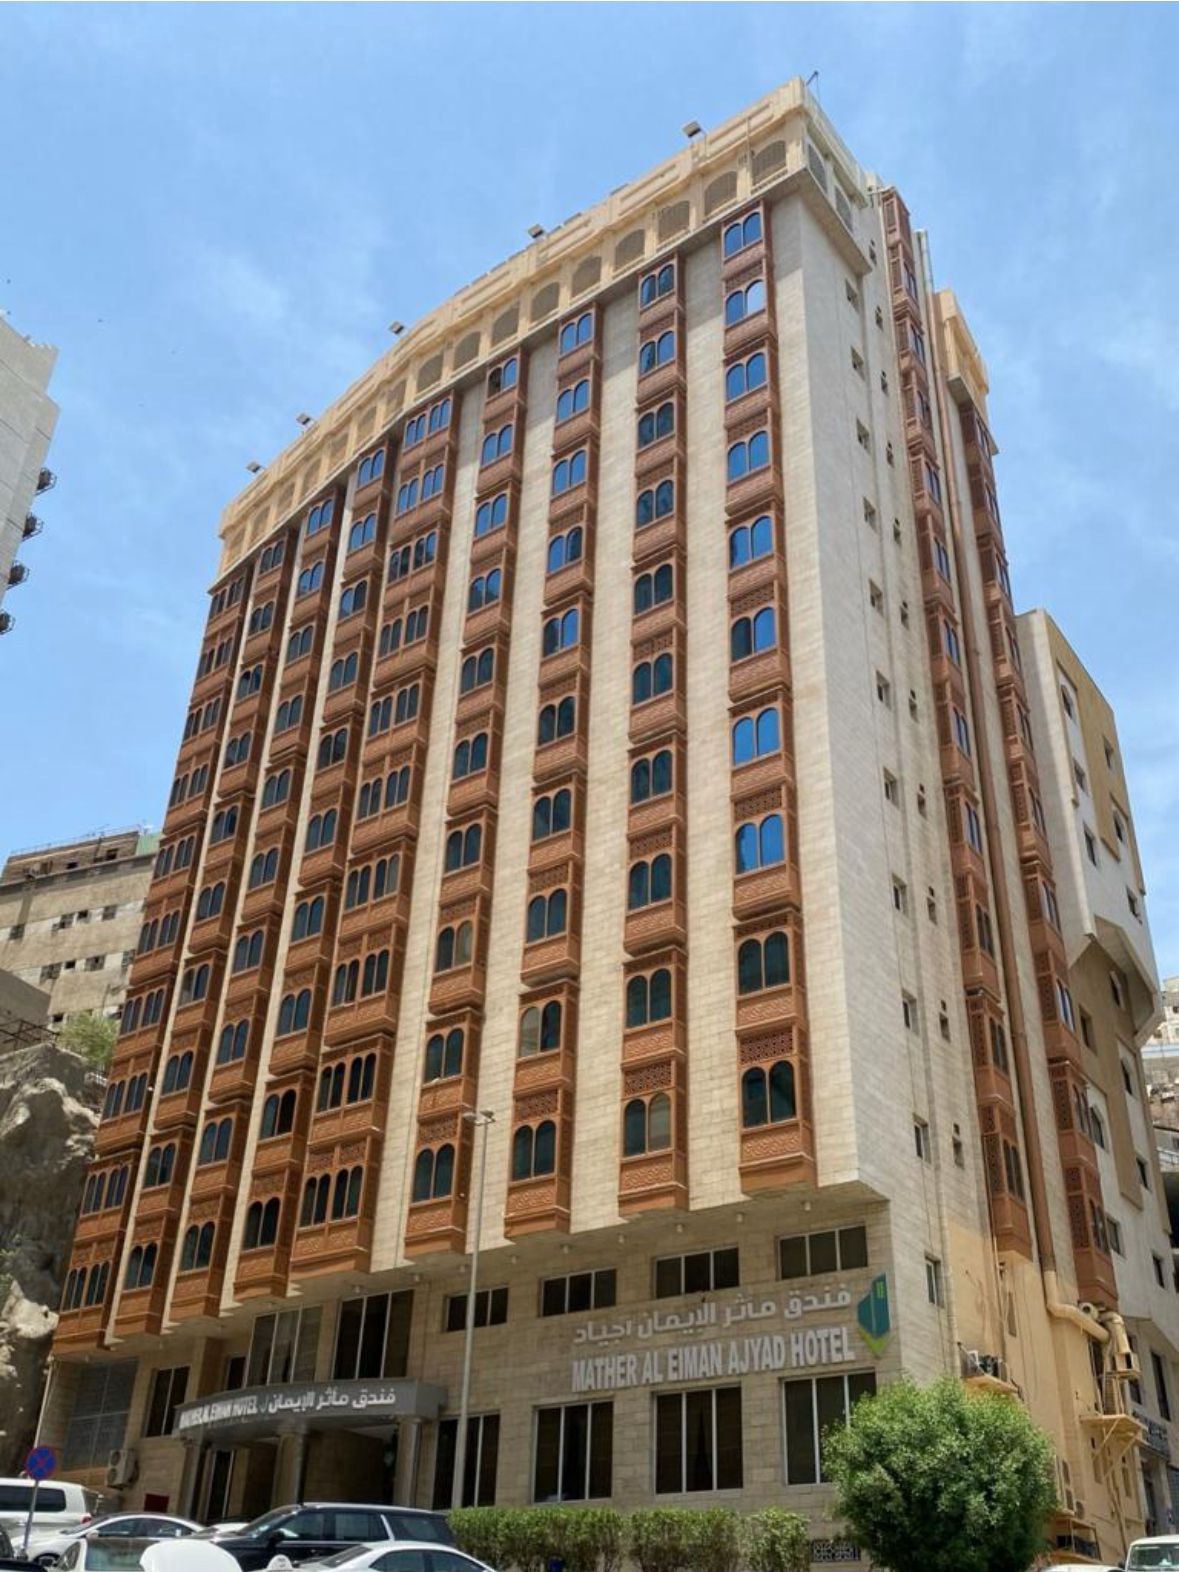 Mather Al Eiman Ajyad hotel